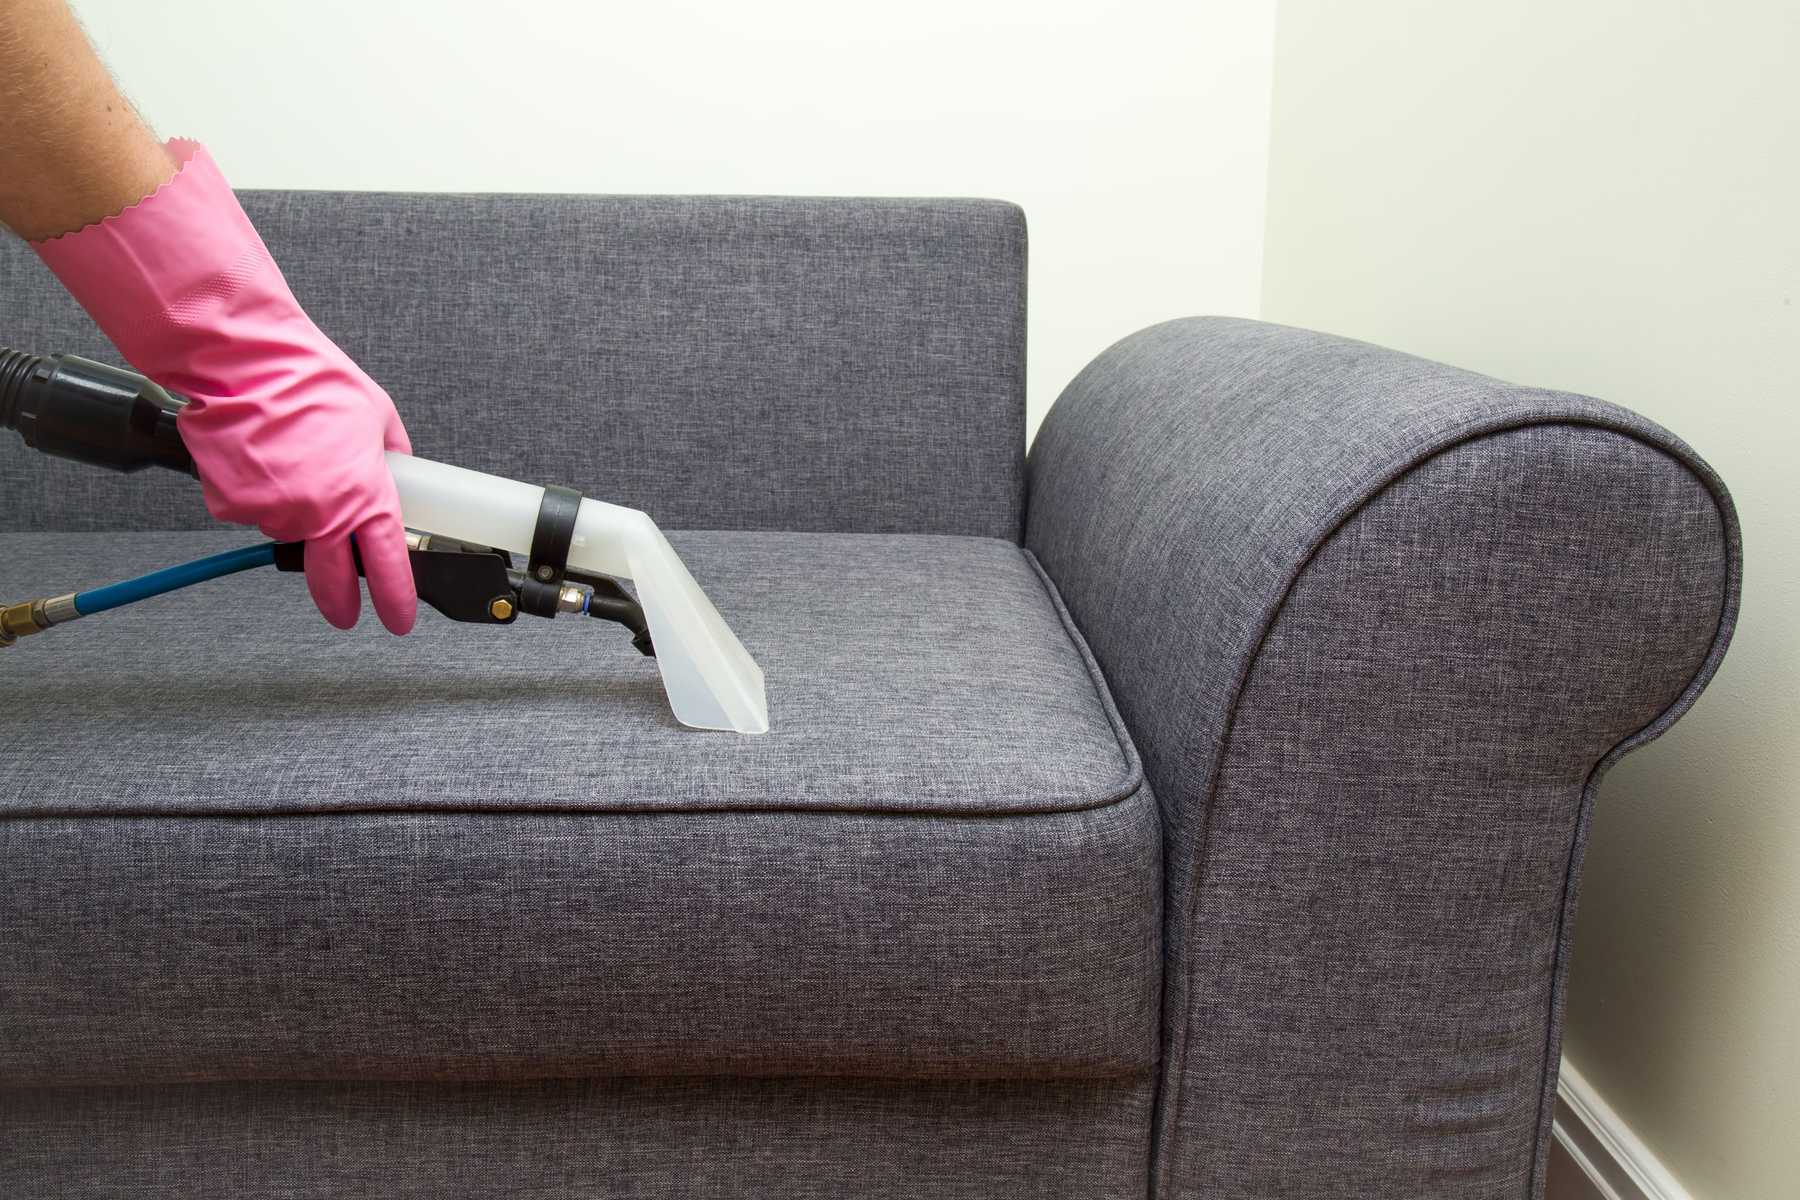 man wearing pink gloves cleaning sofa